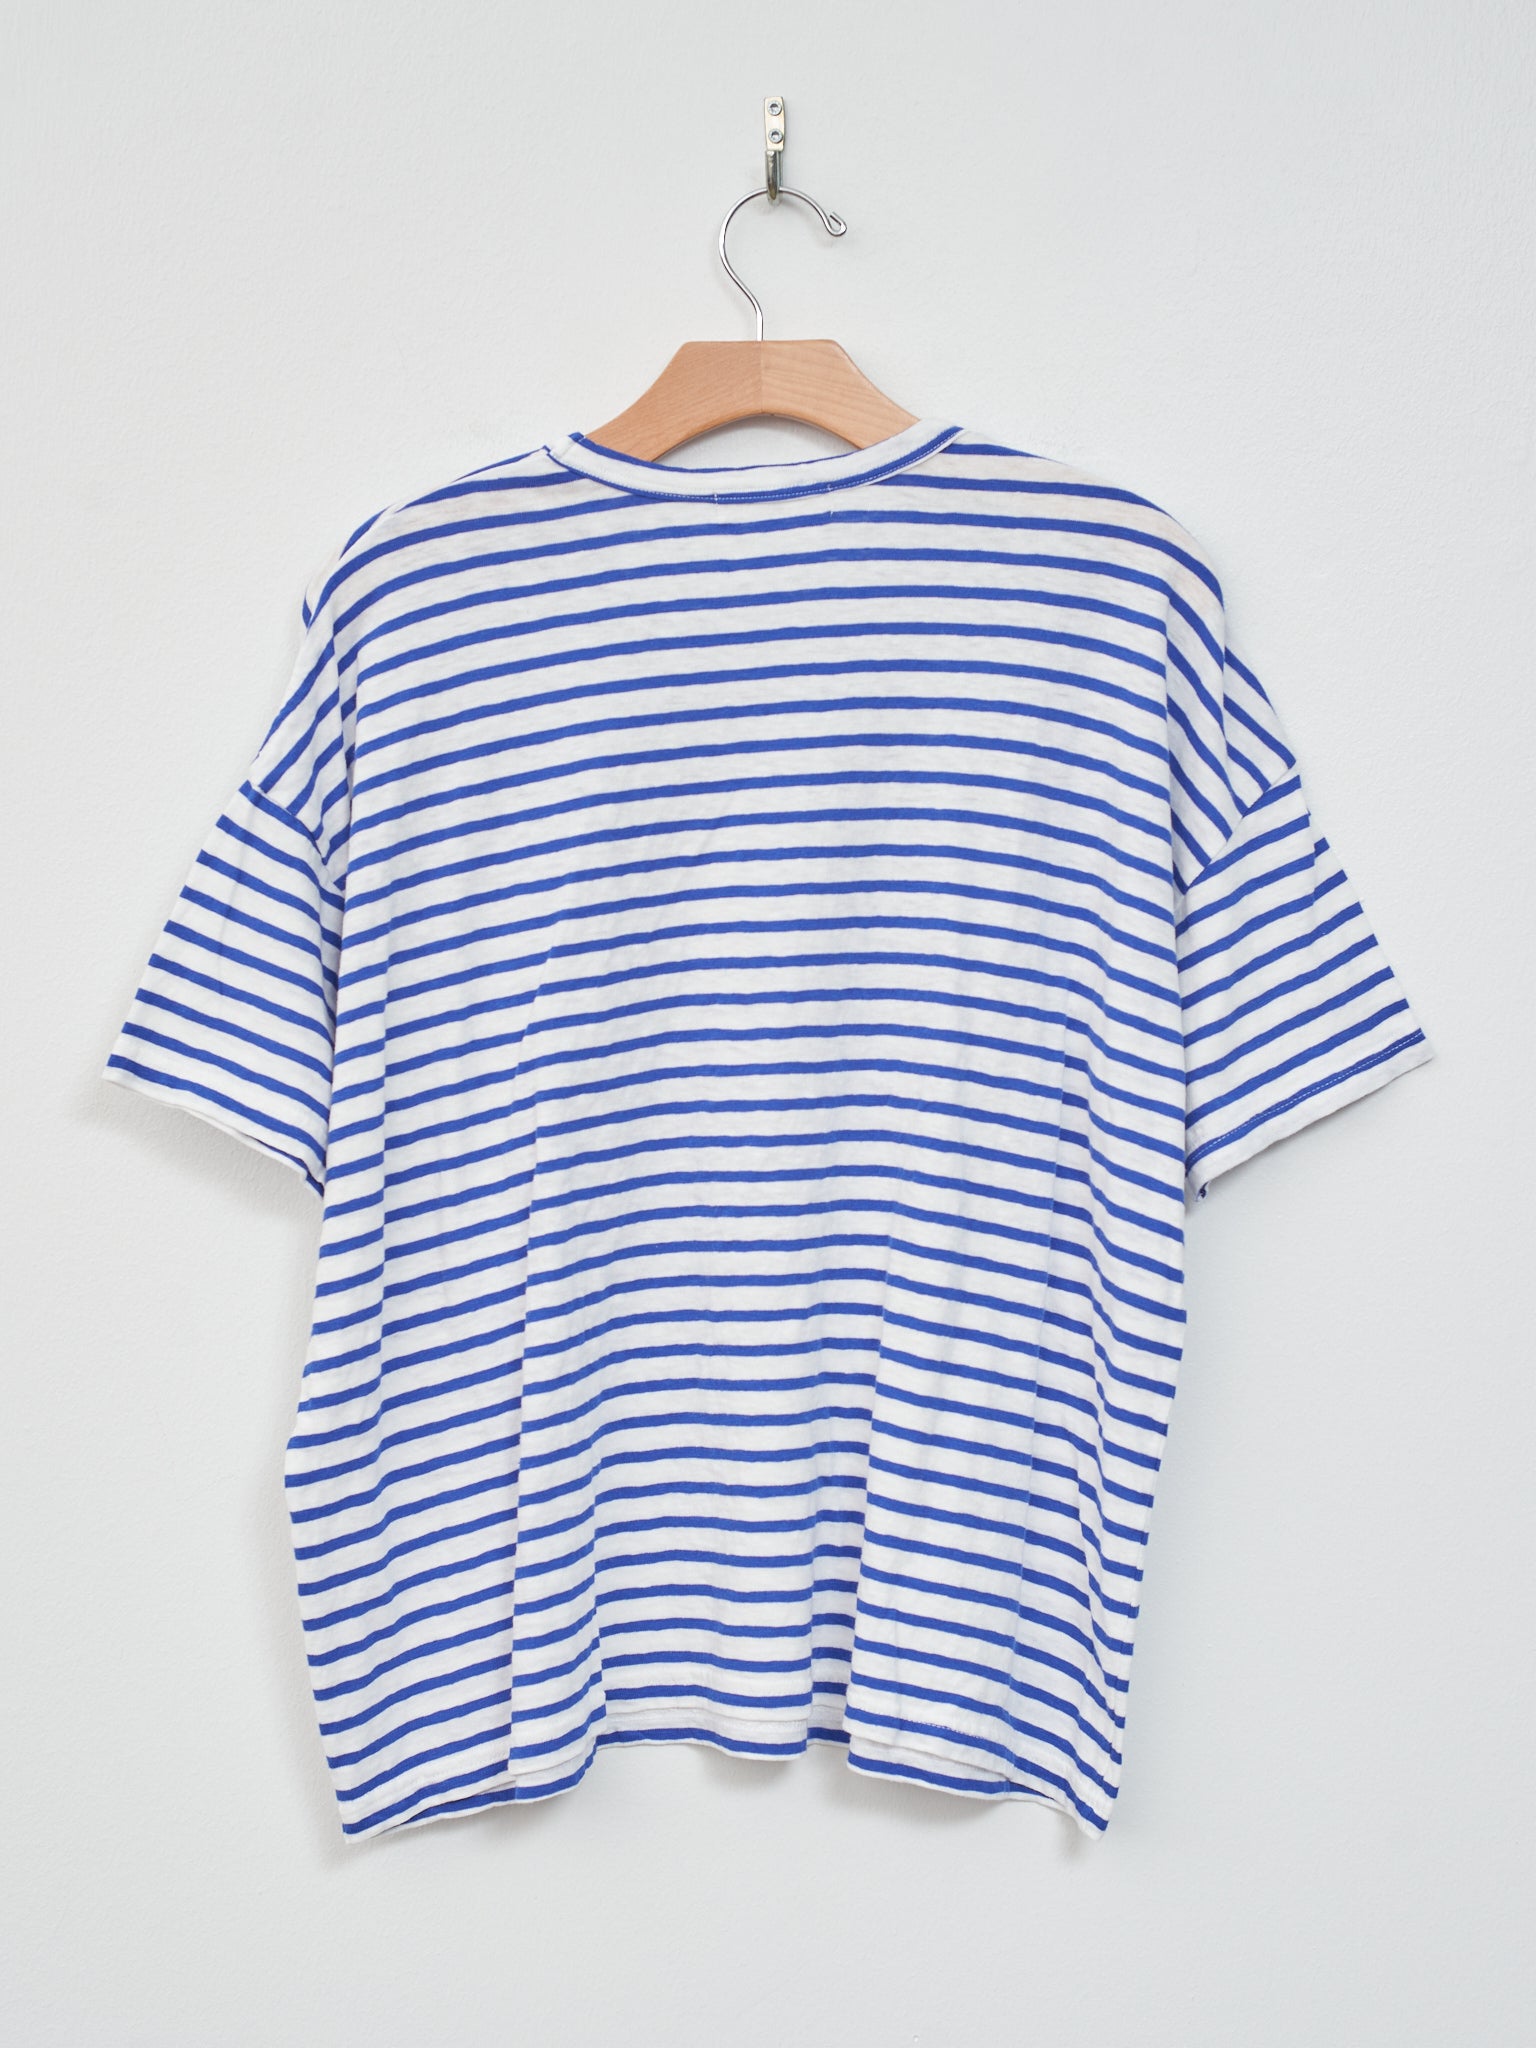 Namu Shop - Ichi Stripe T-Shirt - White/Royal